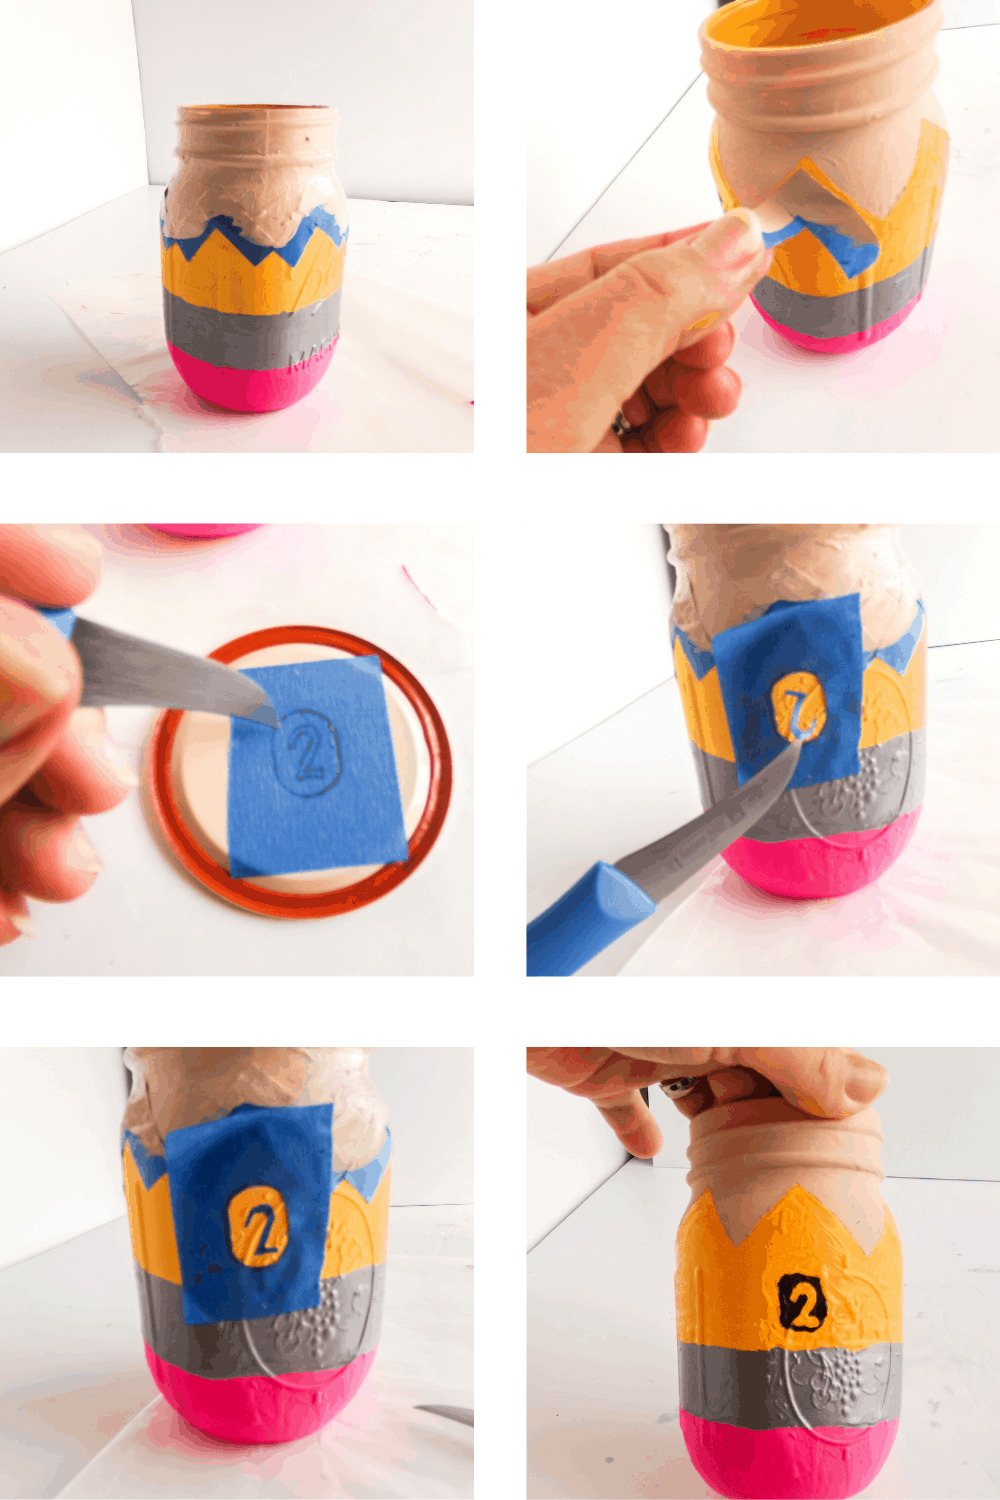 Pencil painted jar craft